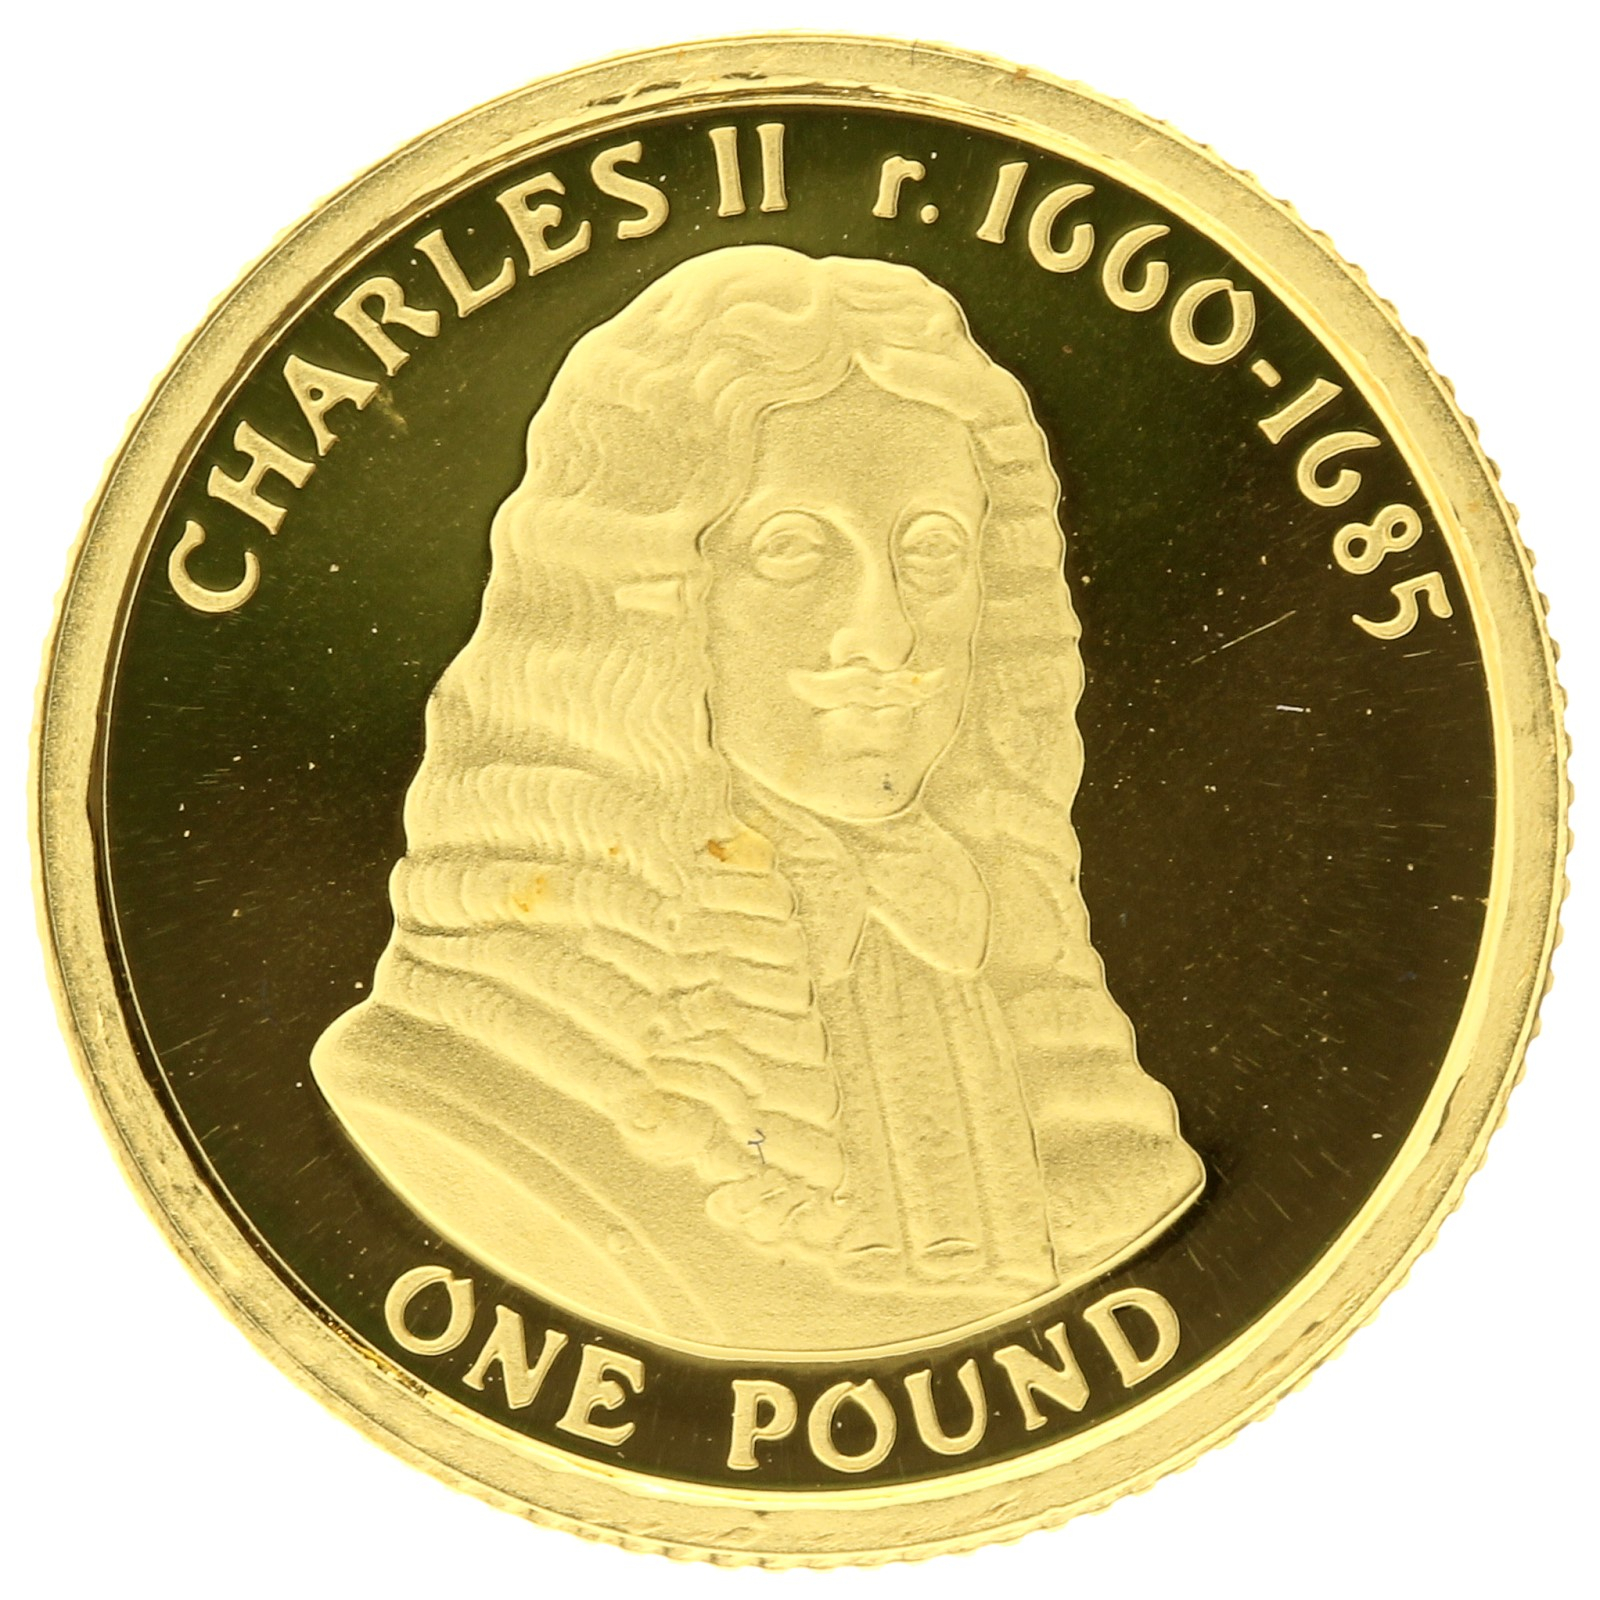 Alderney - 1 pound - 2008 - Charles II - 1/25oz